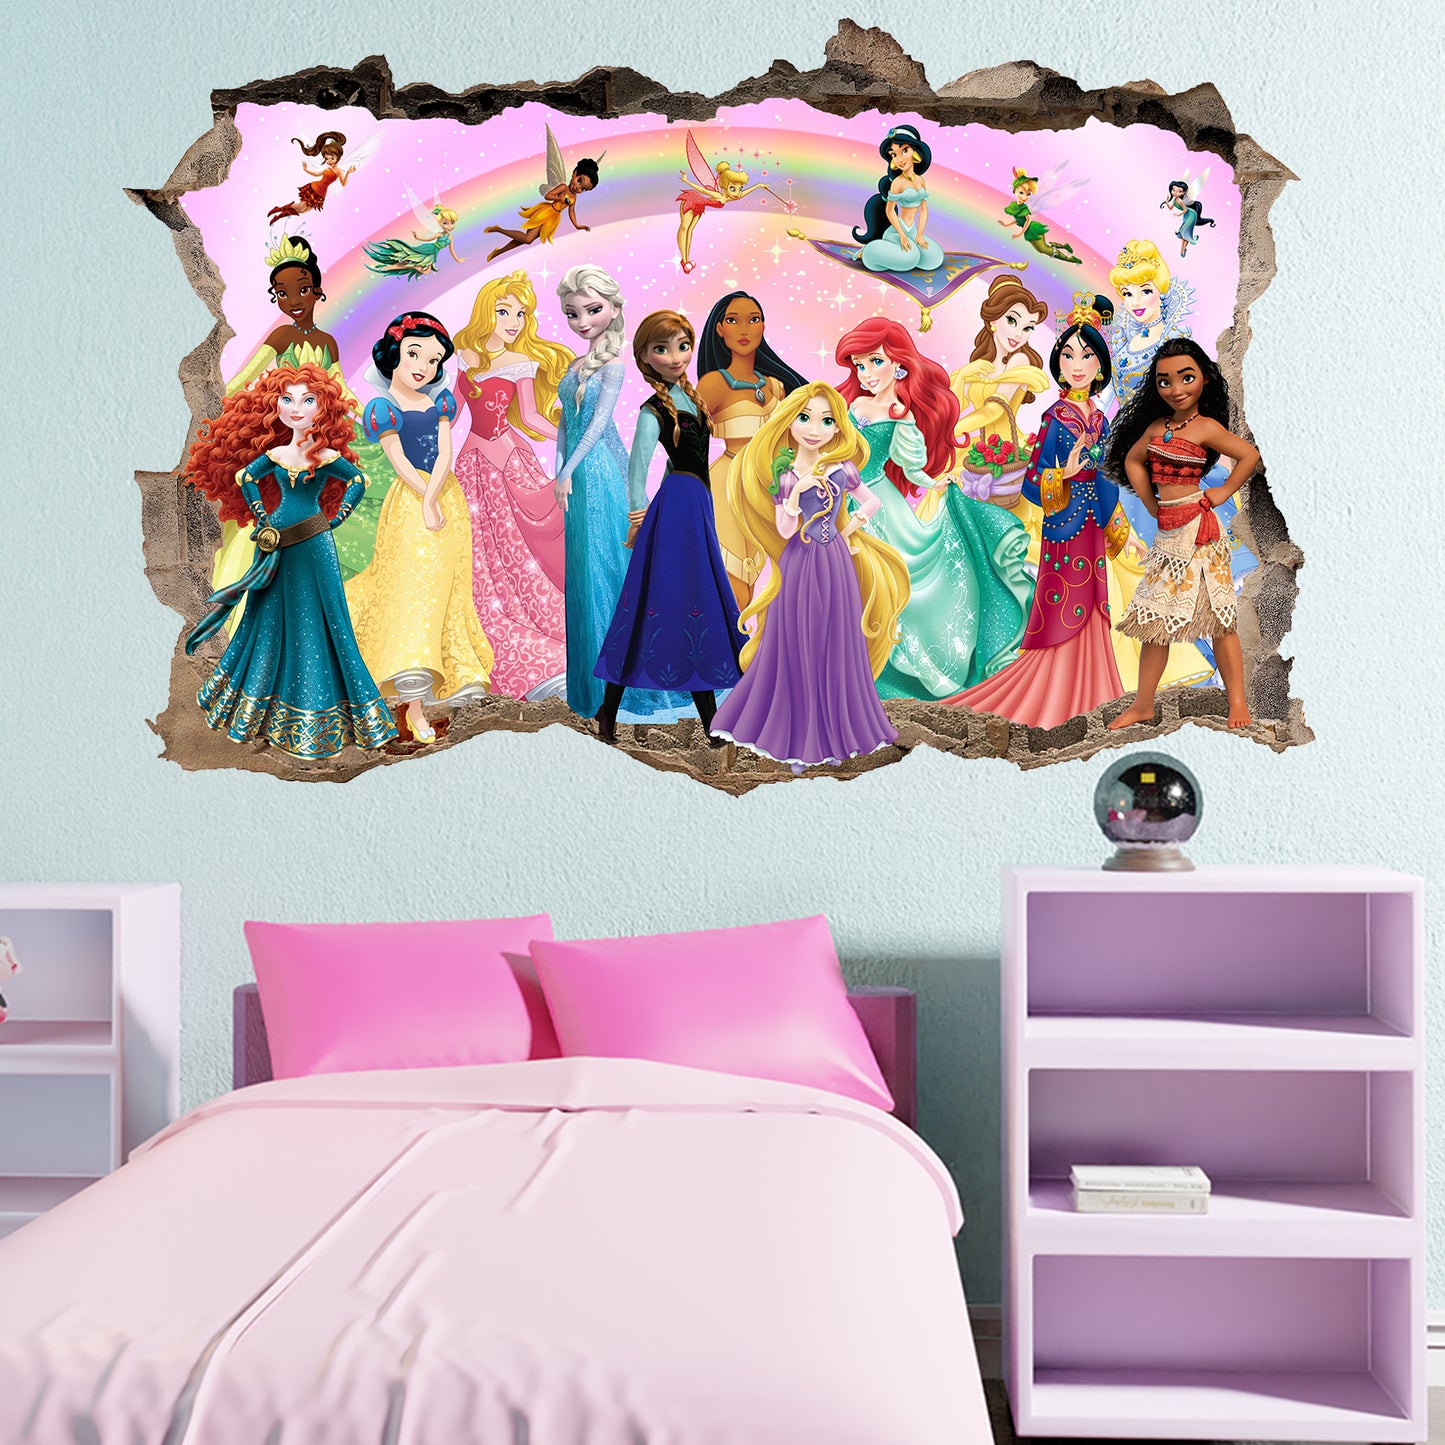 Rainbow Princess Characters and Fairies Wall Sticker Art Poster Decal Mural  Nursery Girls Bedroom Decor 1095